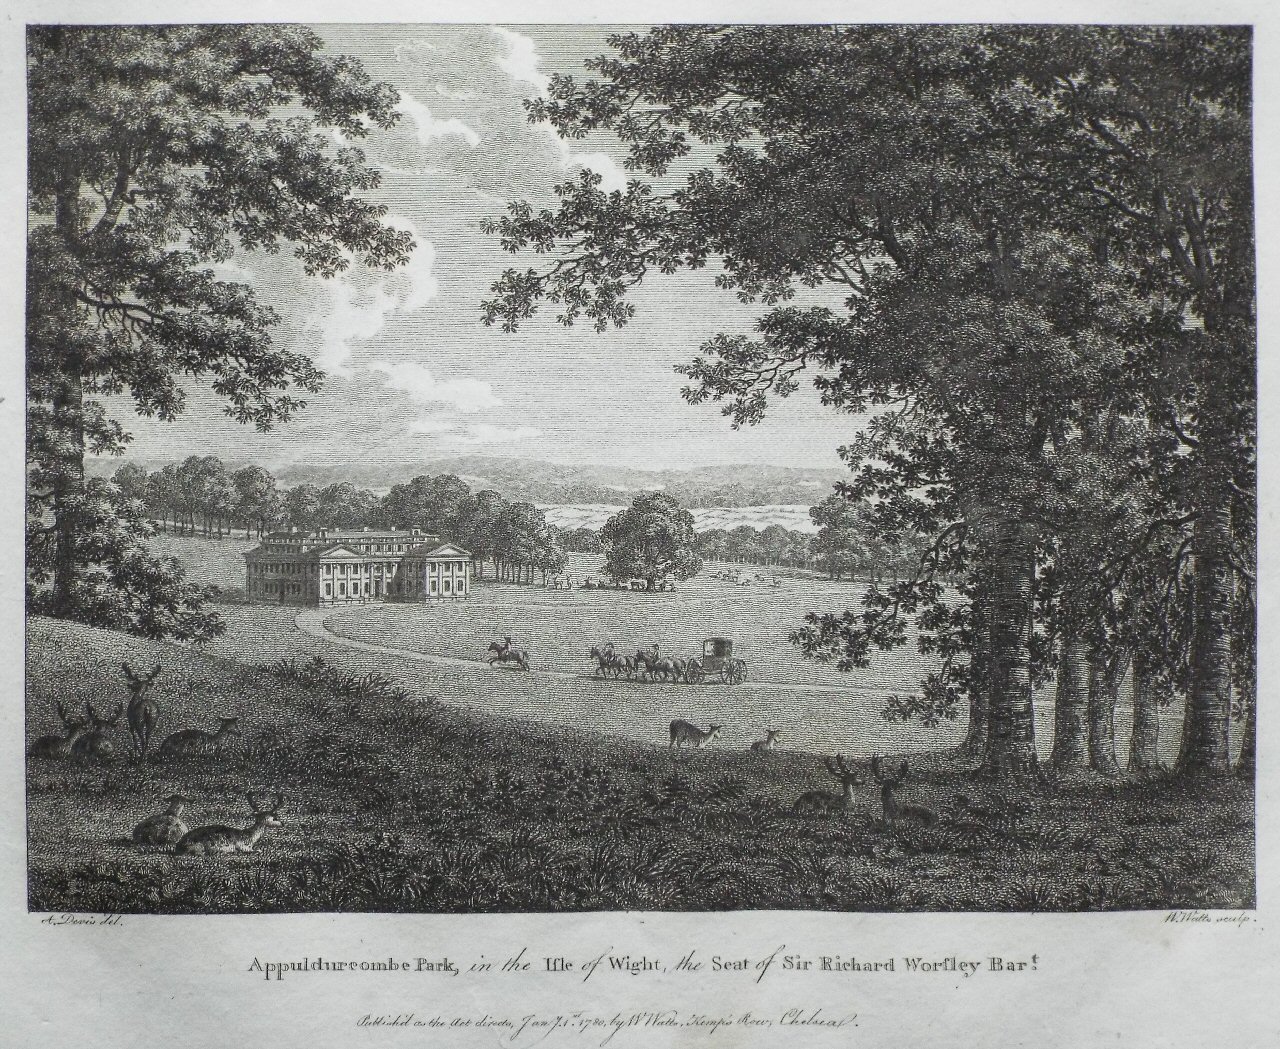 Print - Appuldurcombe Park, in the Isle of Wight, the Seat of Sir Richard Worsley Bart. - Watts